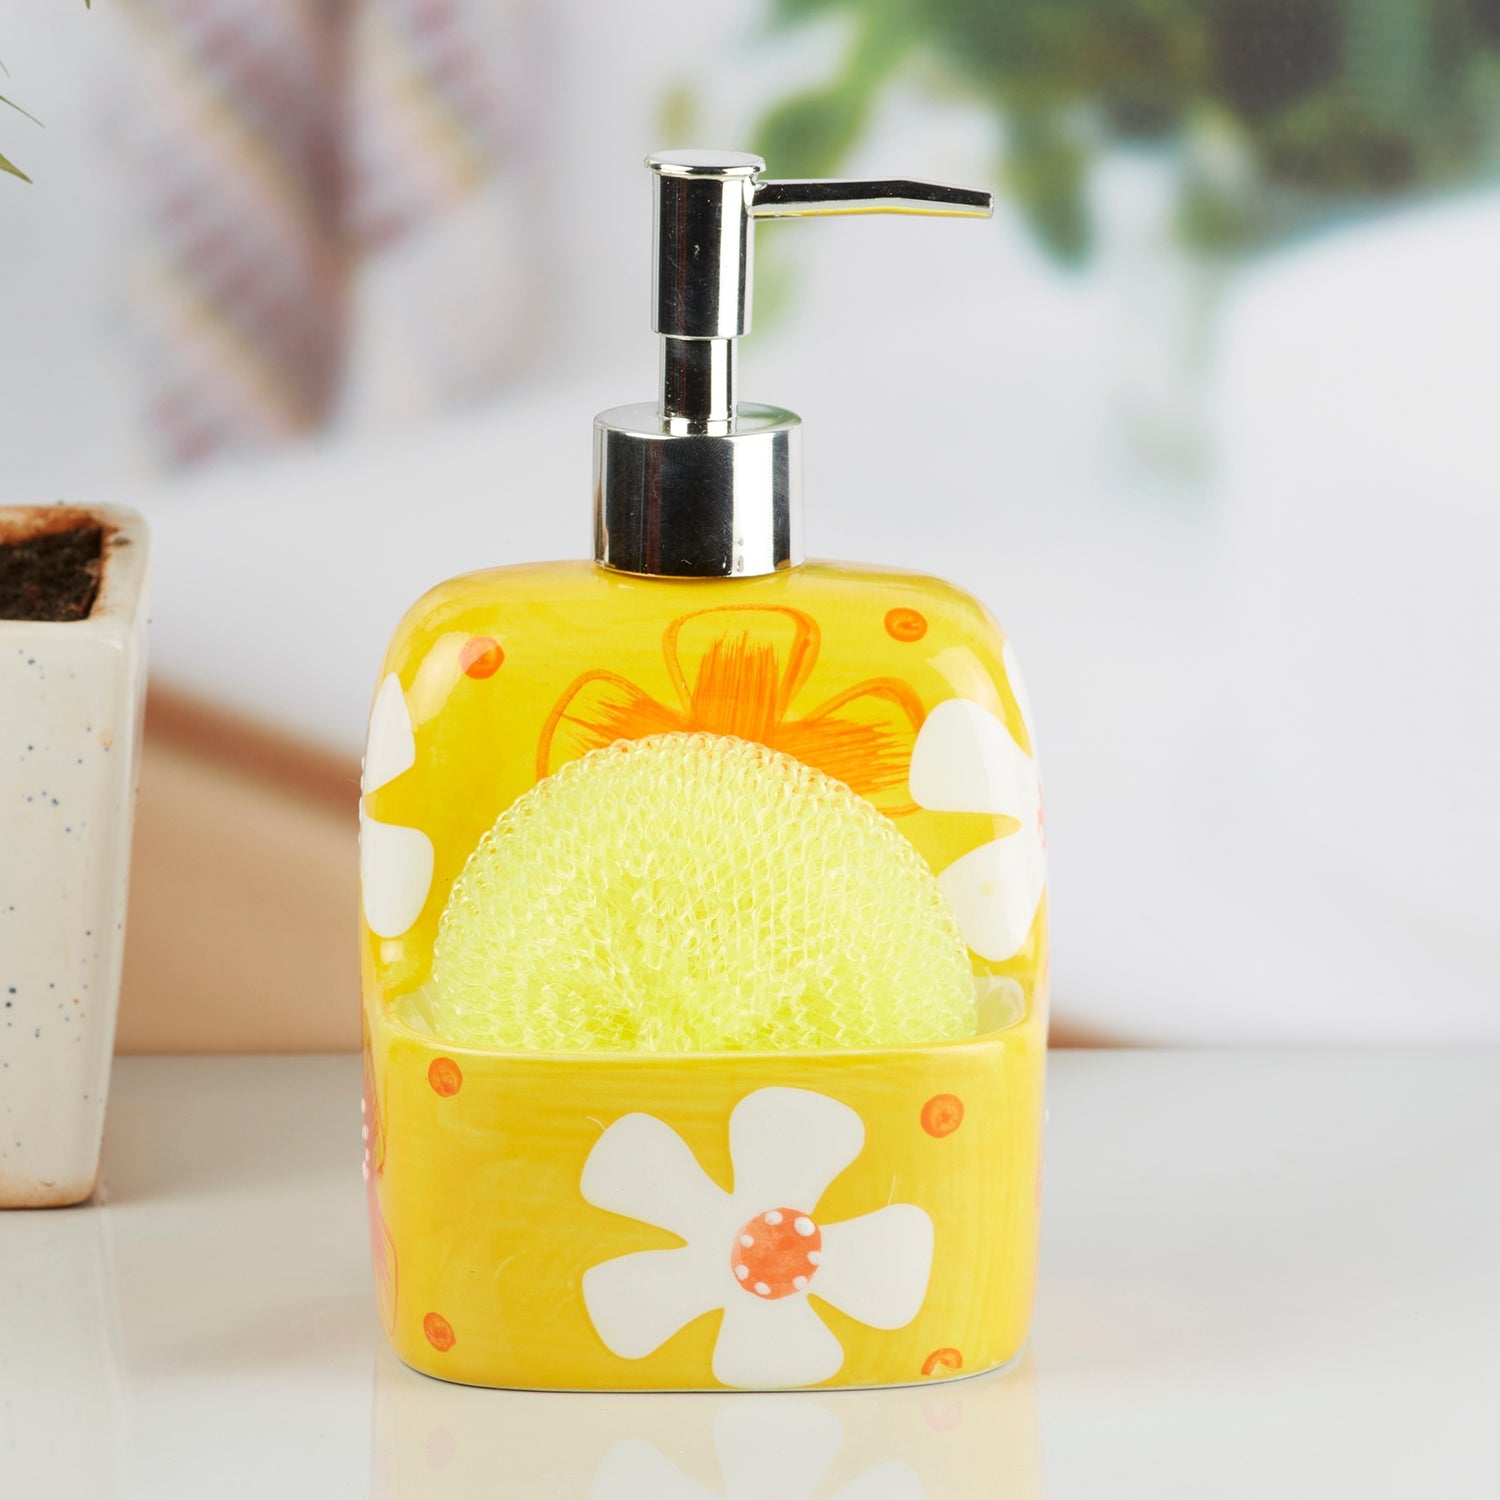 Ceramic Soap Dispenser Pump for Bathroom for Bath Gel, Lotion, Shampoo (8047)